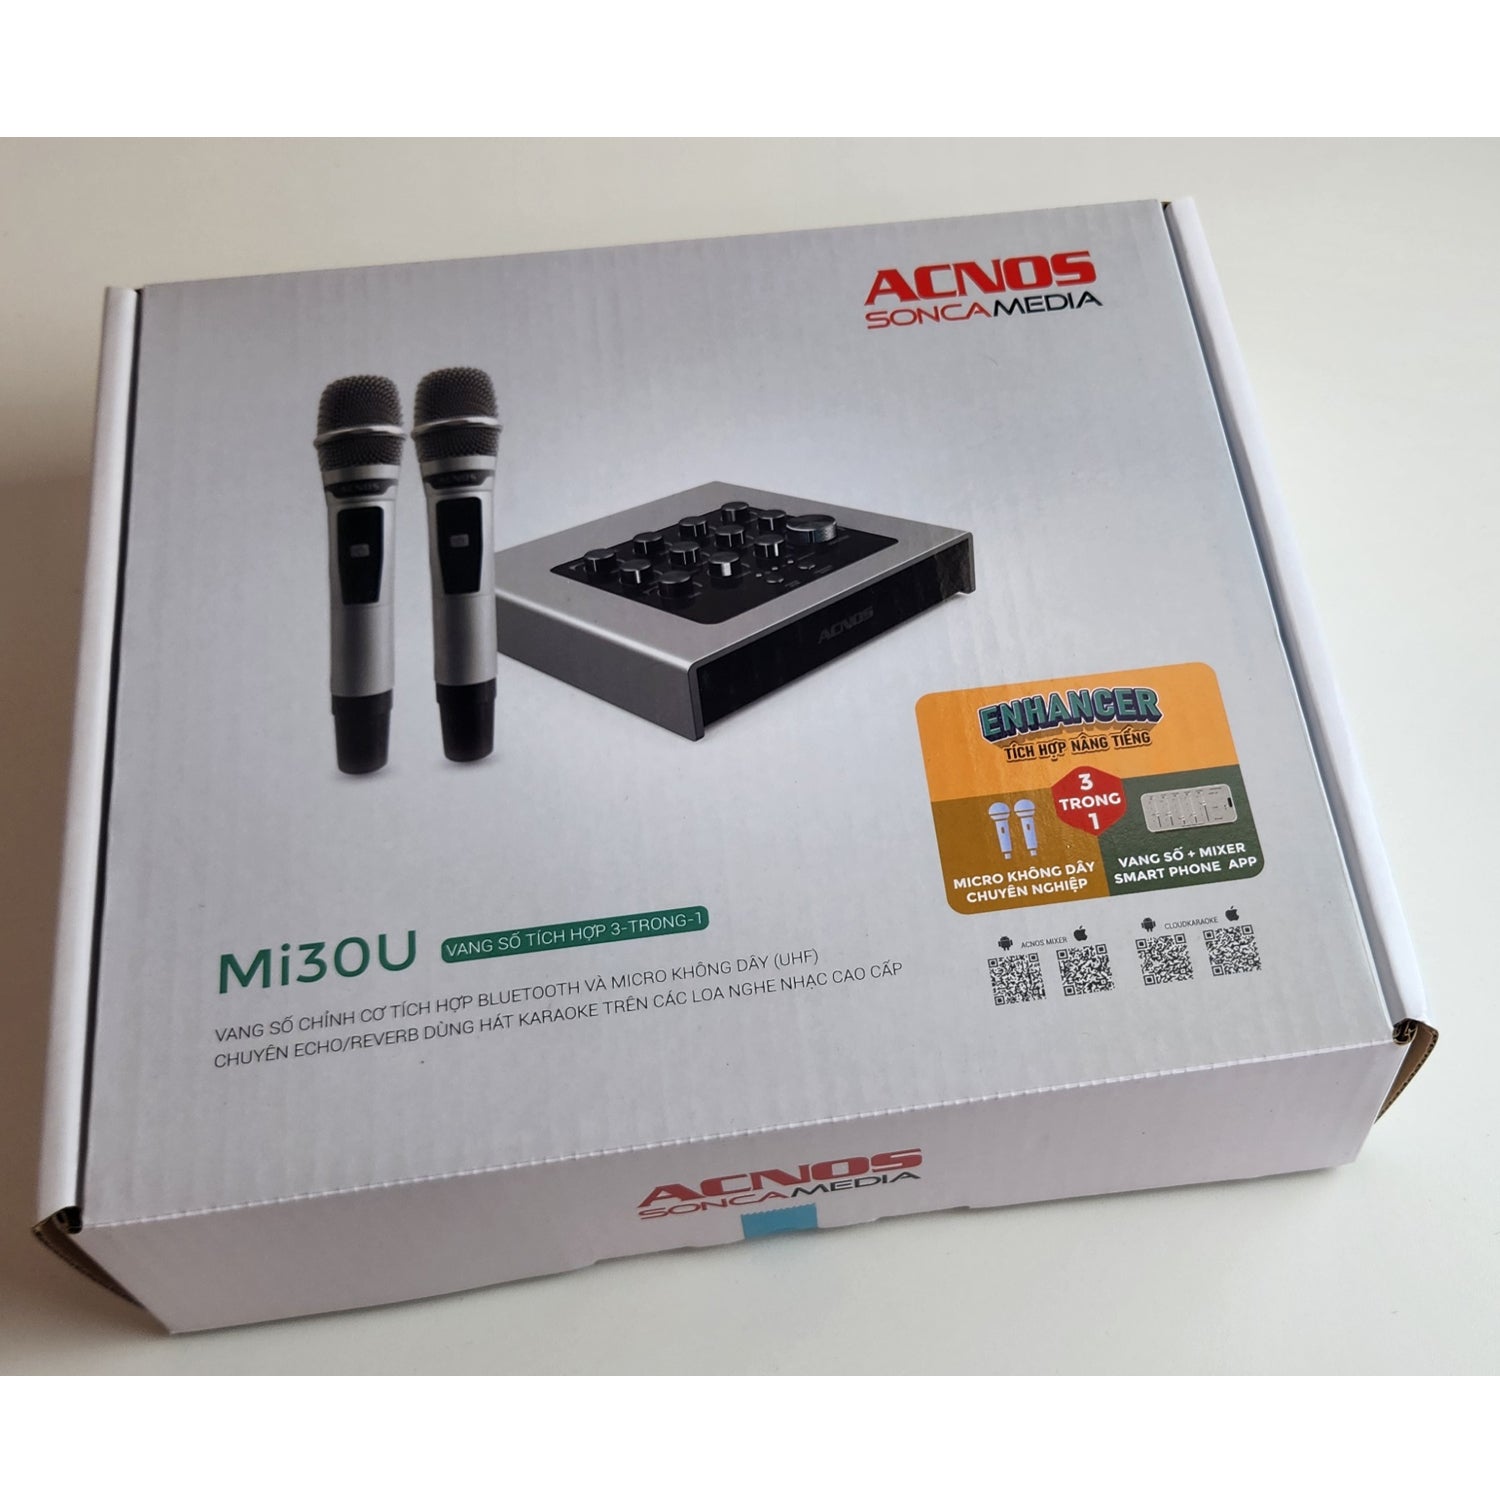 ACNOS Mi-30u (Silver) Compact Portable Karaoke Enhancer Mixer + 2 UHF Wireless Microphones + Carry Bag - Karaoke Home Entertainment